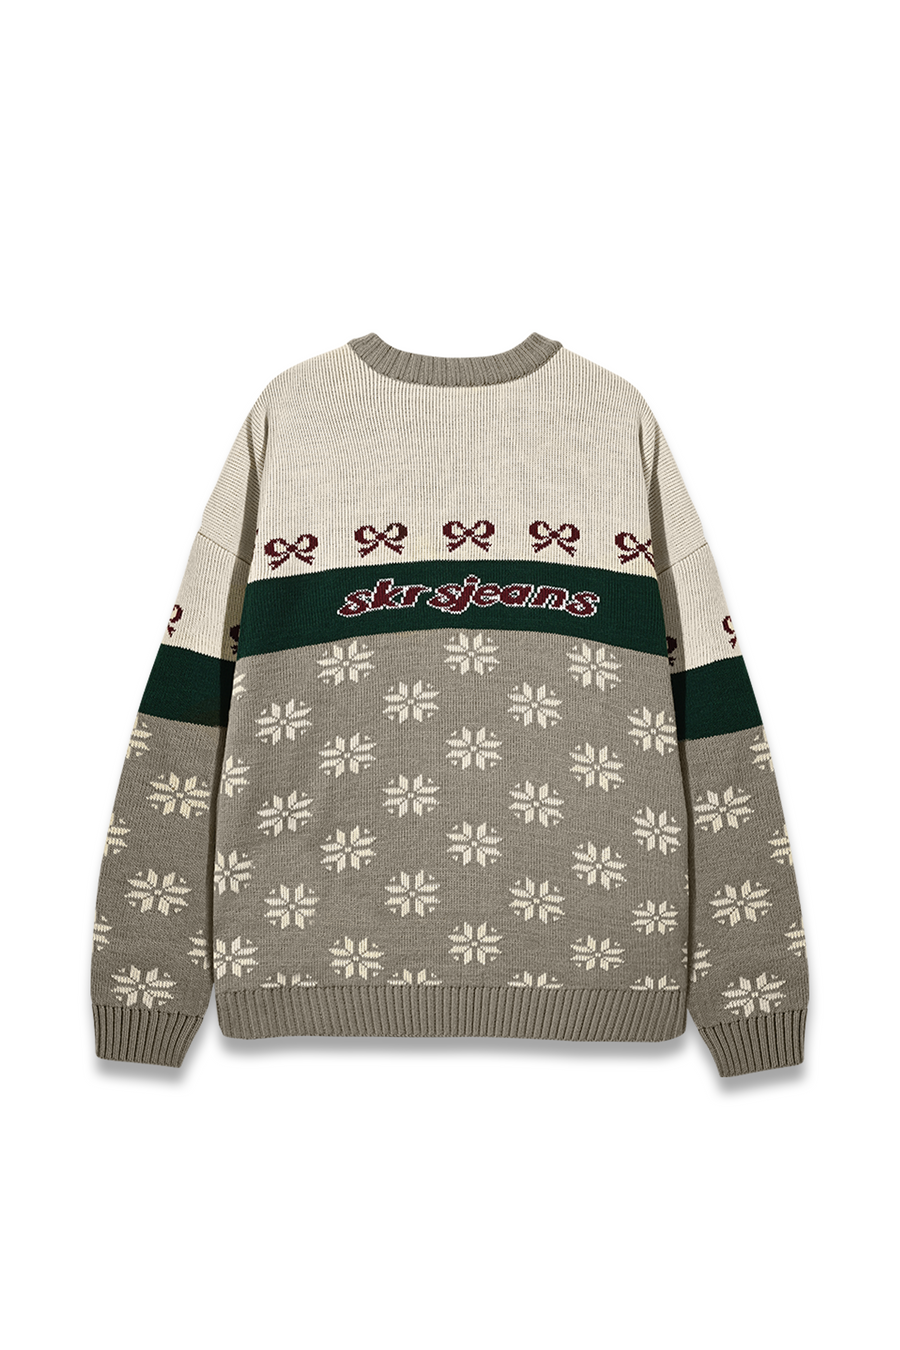 SKRSJeans Christmas Sweater